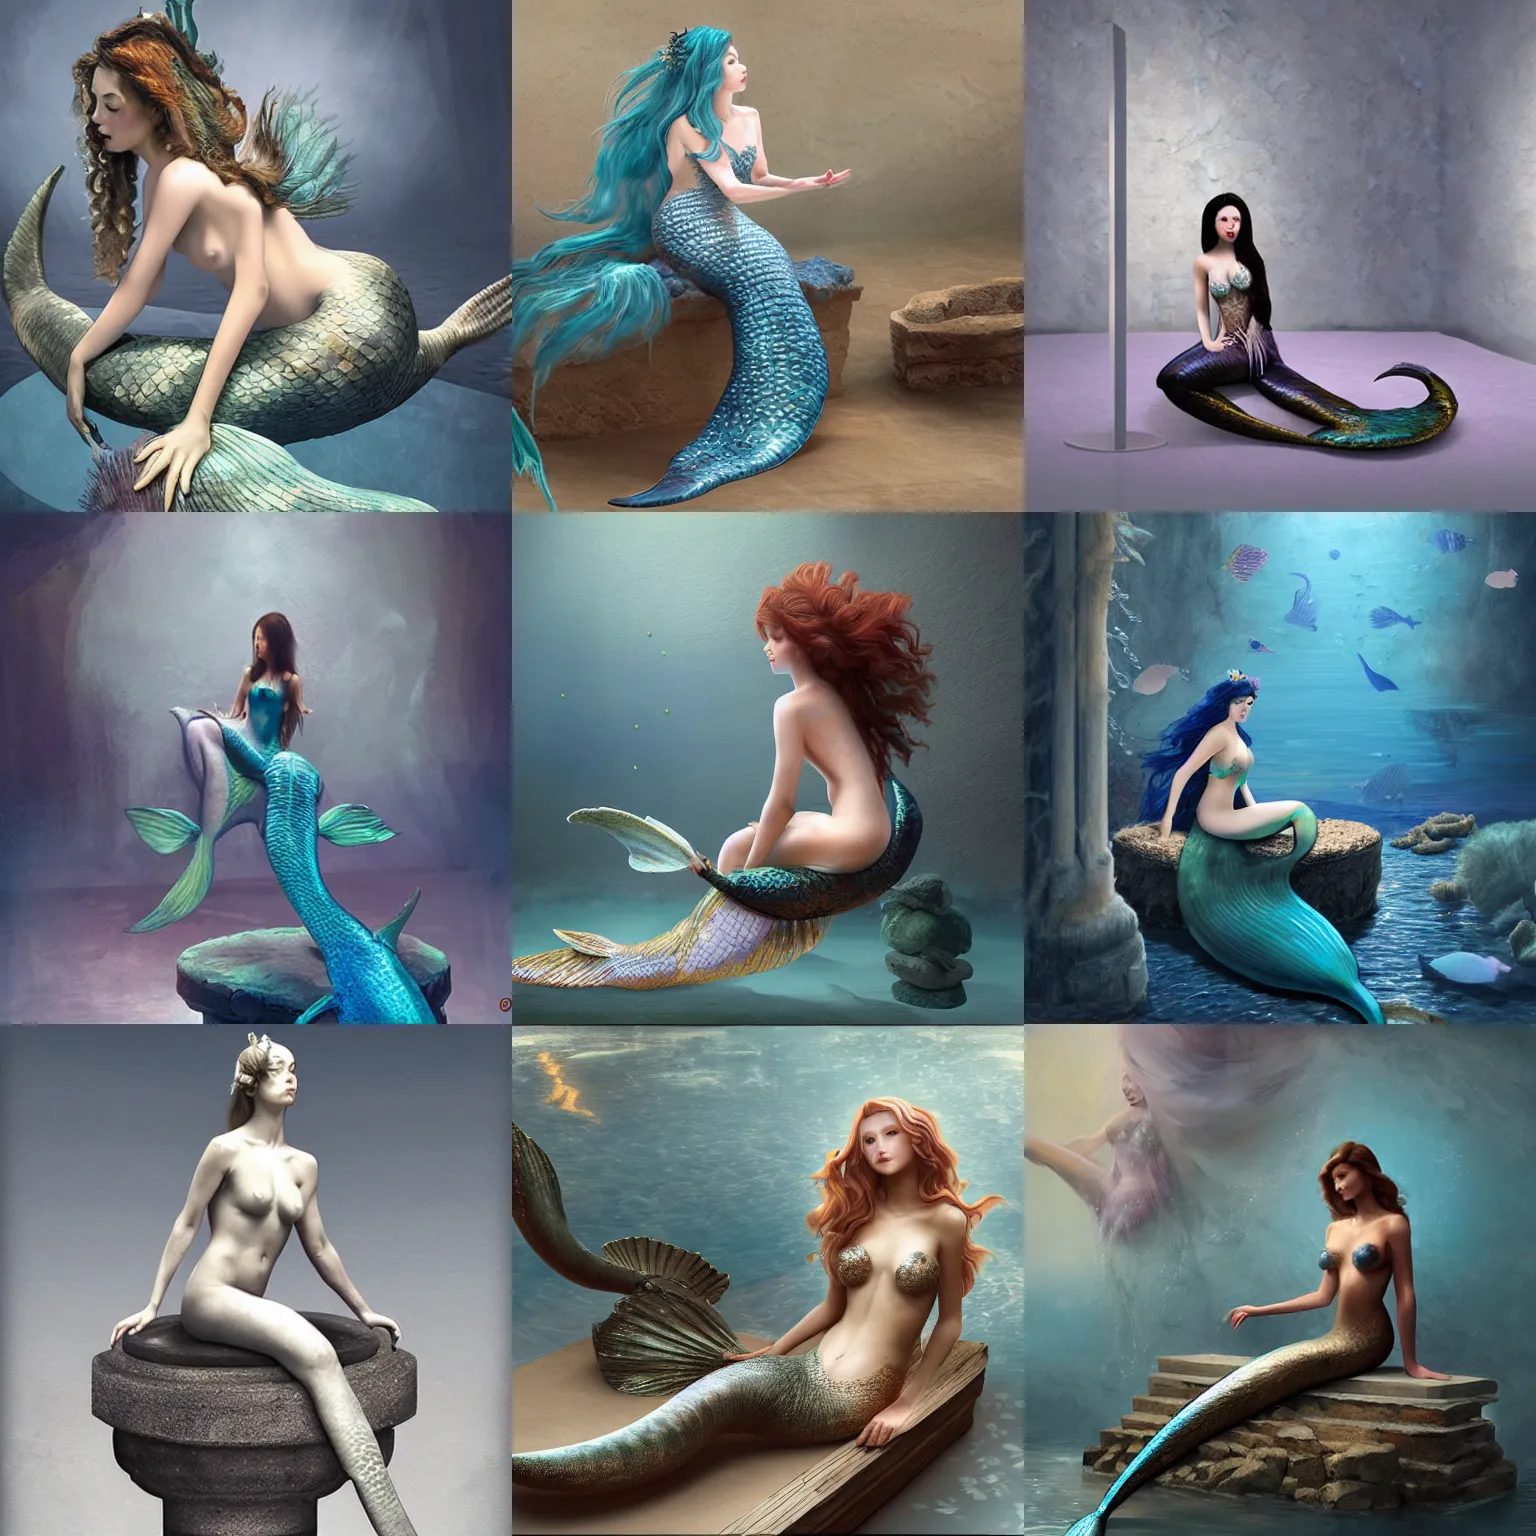 Prompt: mermaid as an exhibit in an art gallery, sitting on a pedestal, concept art, digital art, by xiaoguang sun